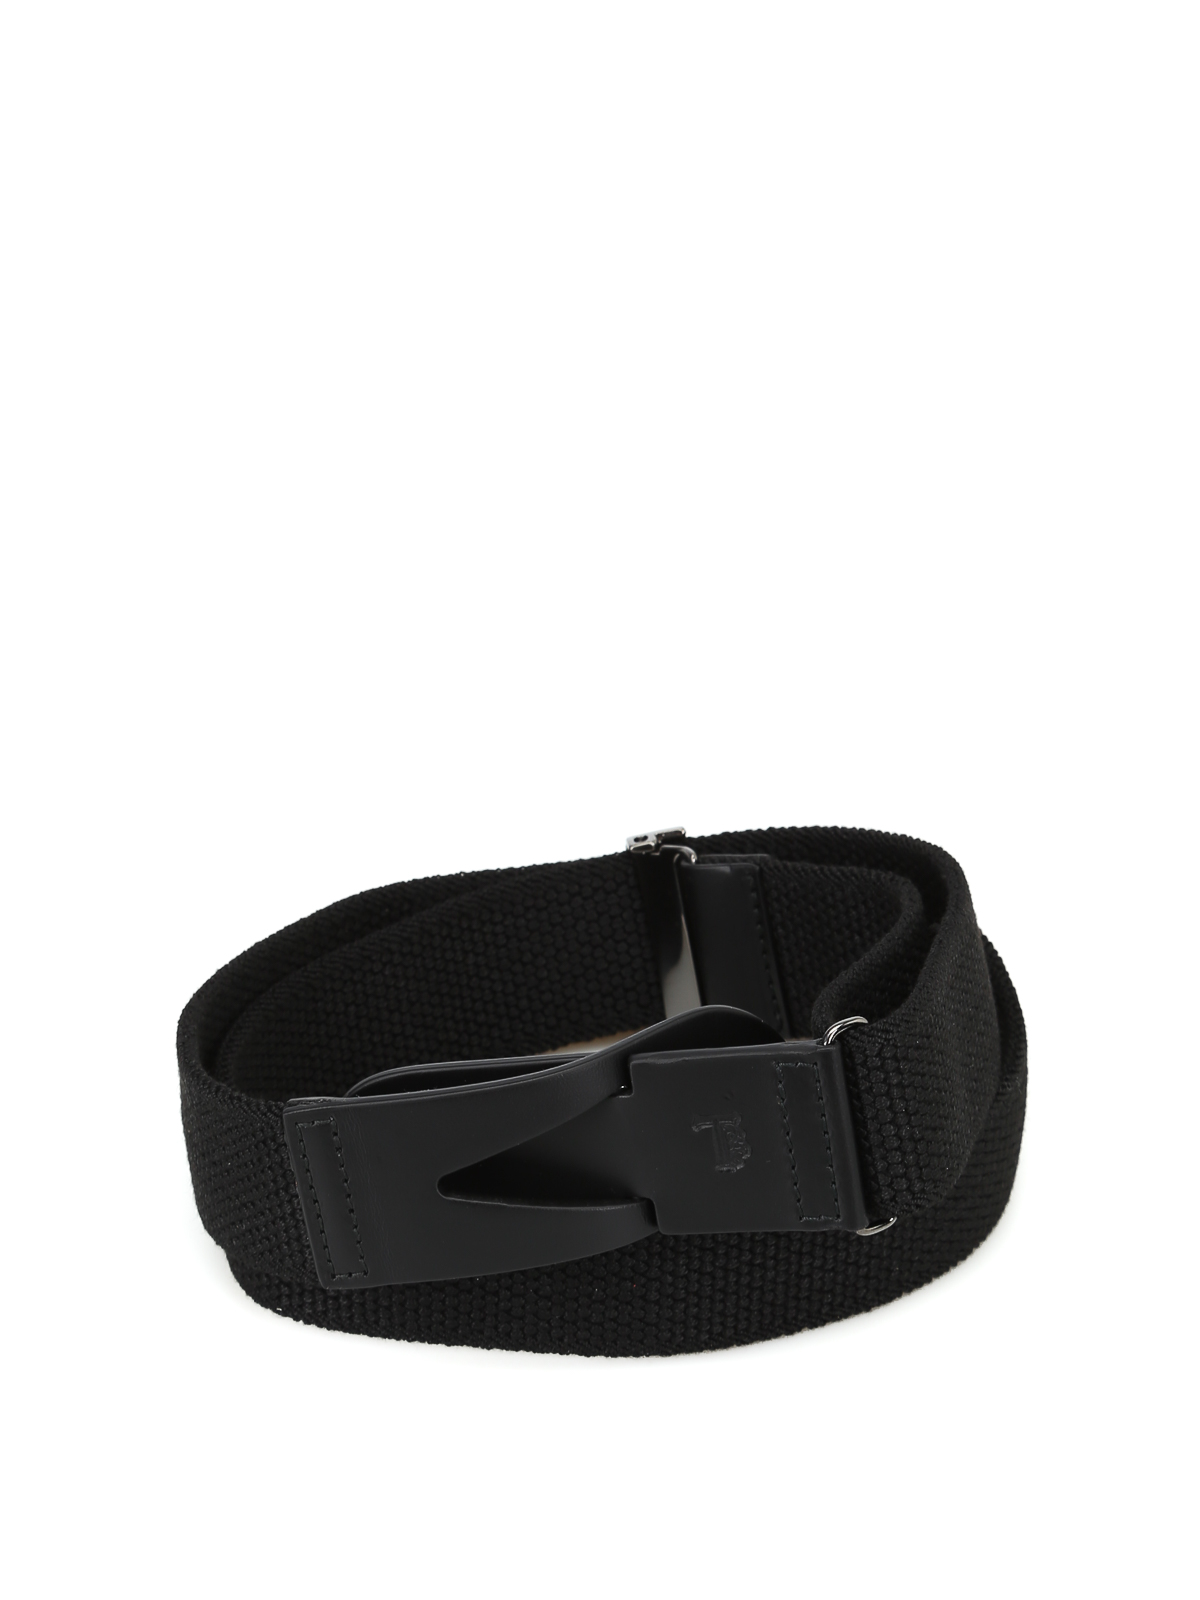 greca leather belt